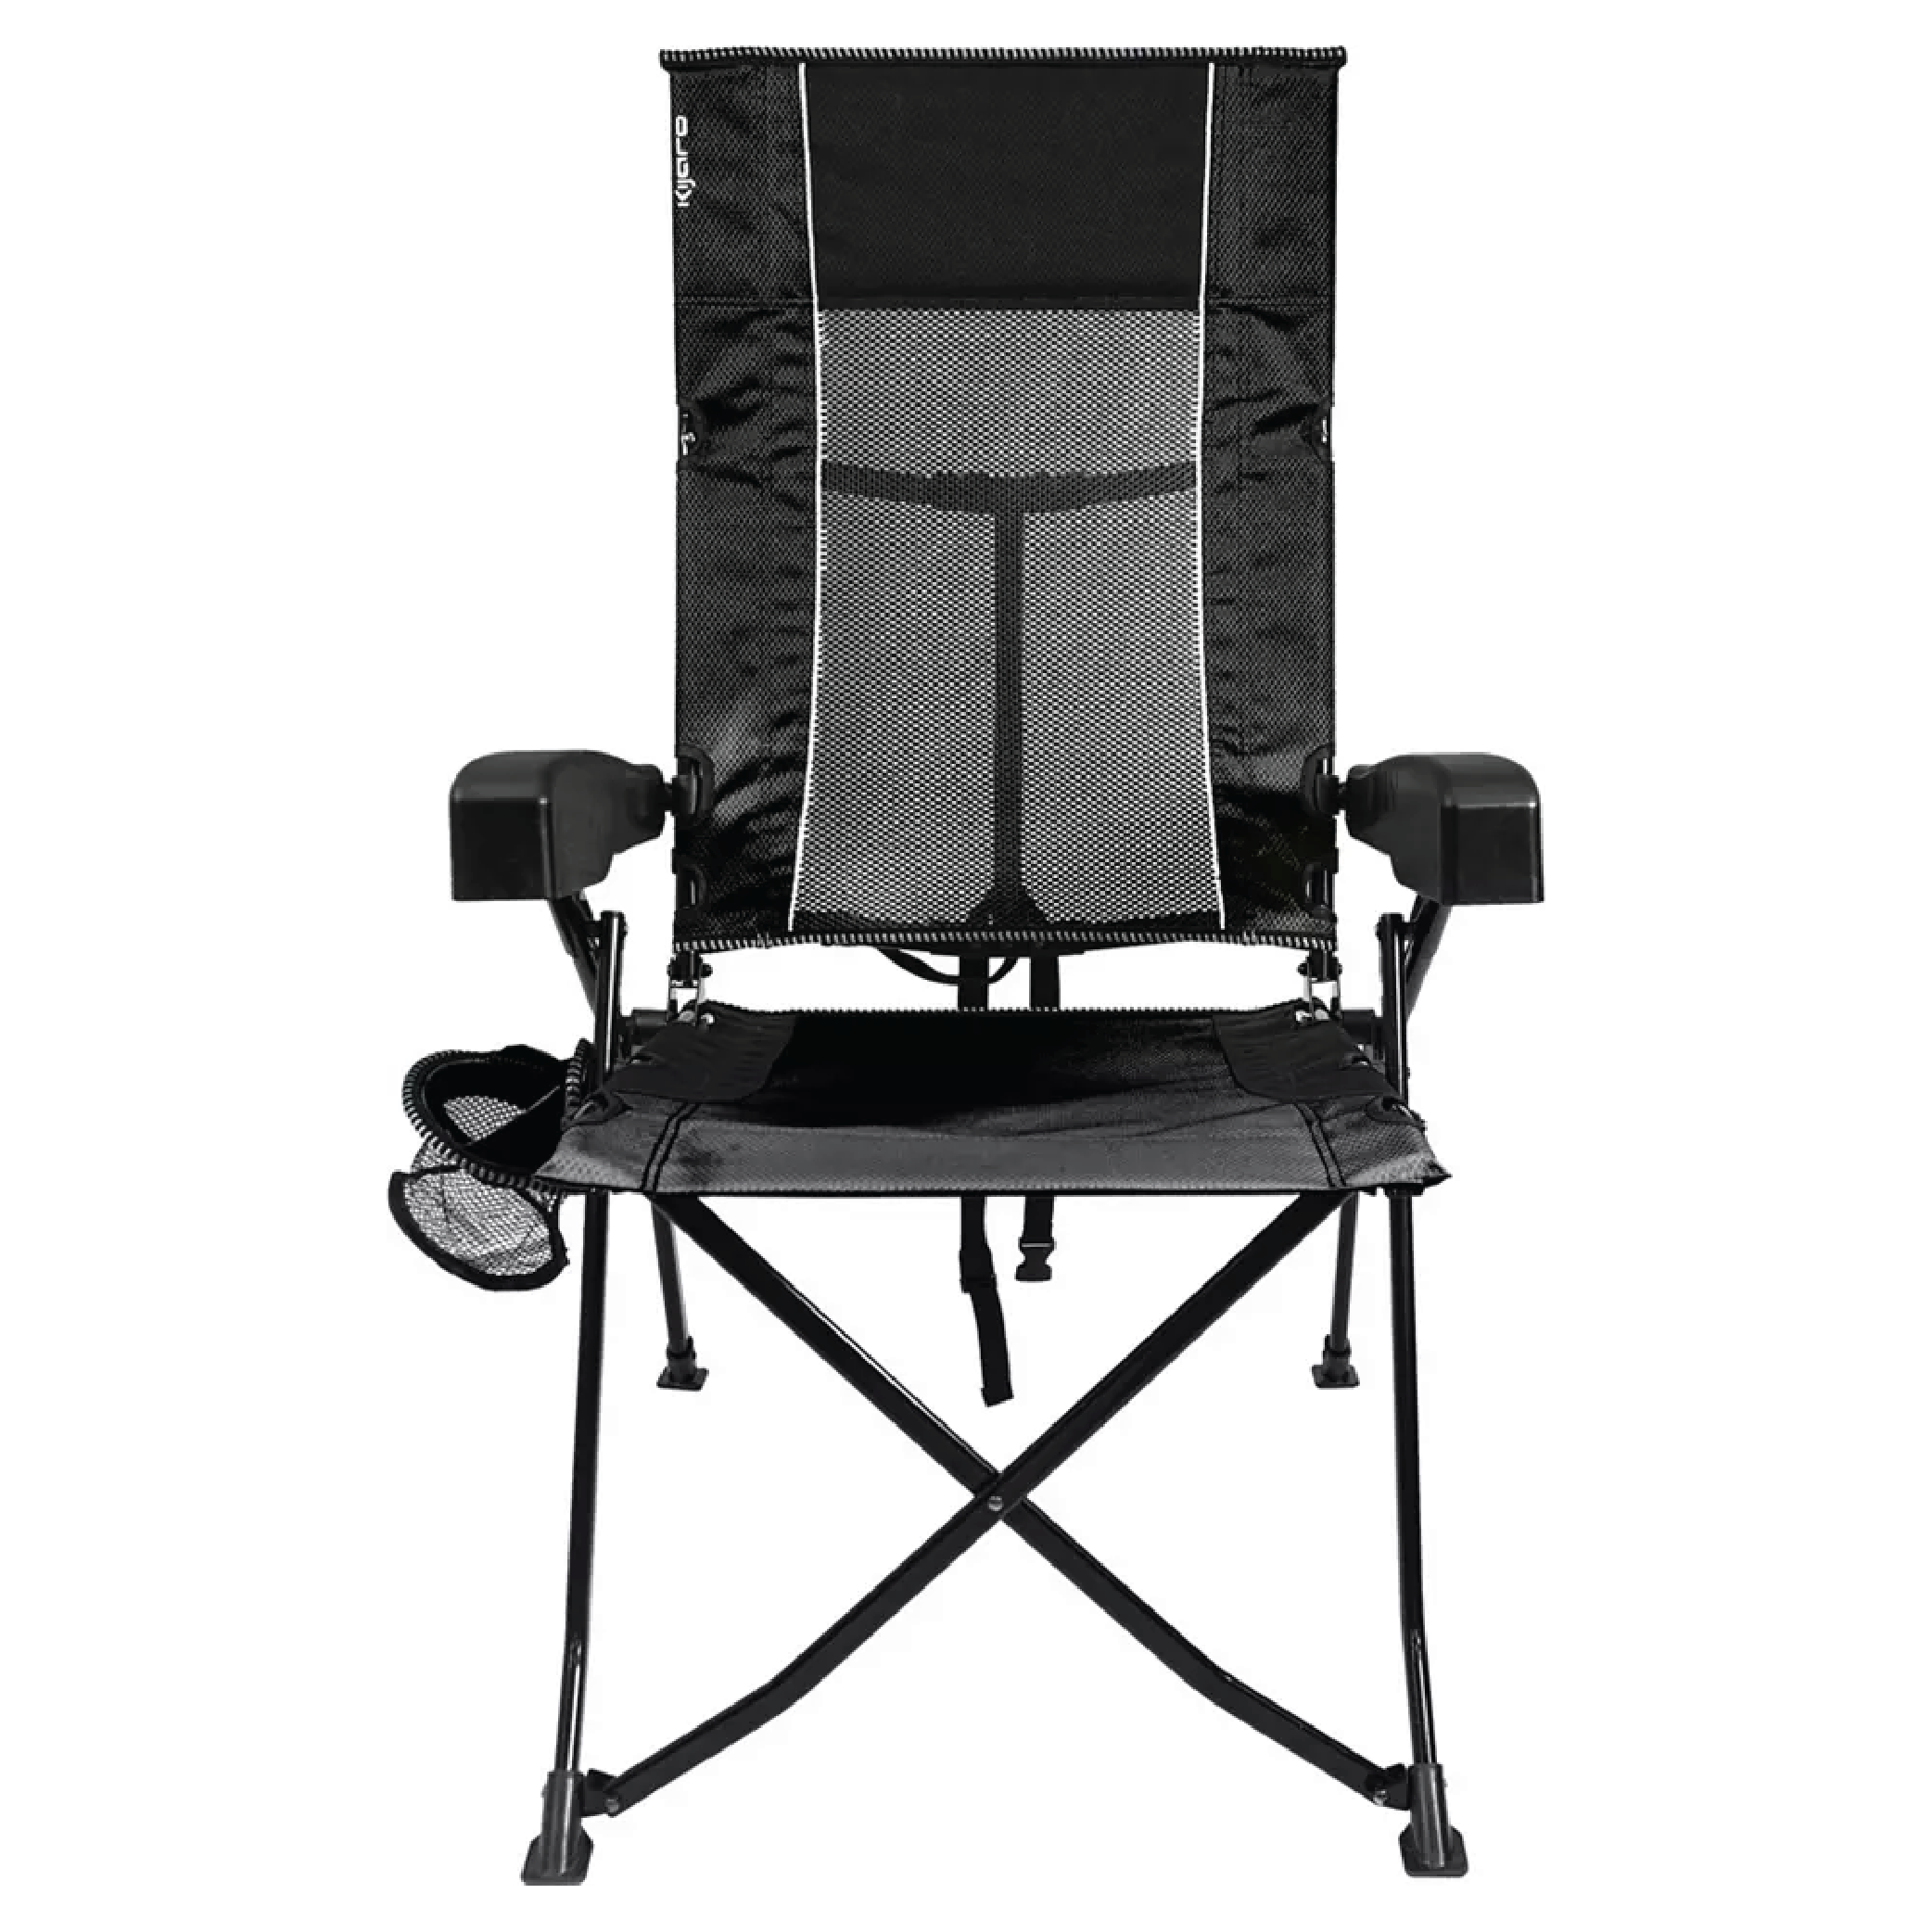 Rok-Back® Apex Rocker Chair